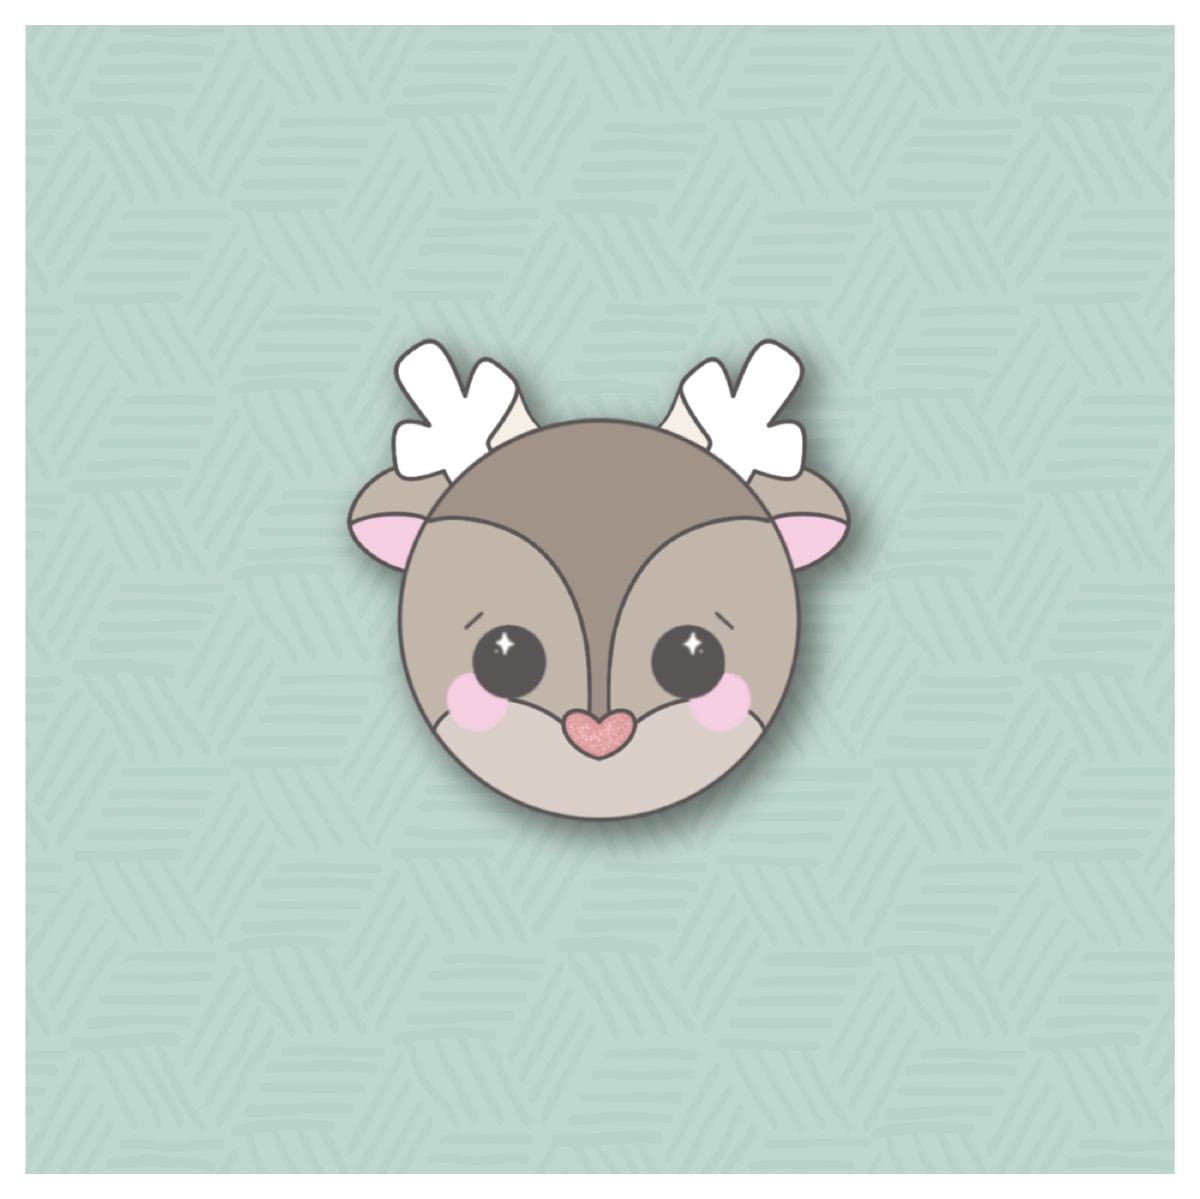 Chibi Reindeer Cookie Cutter